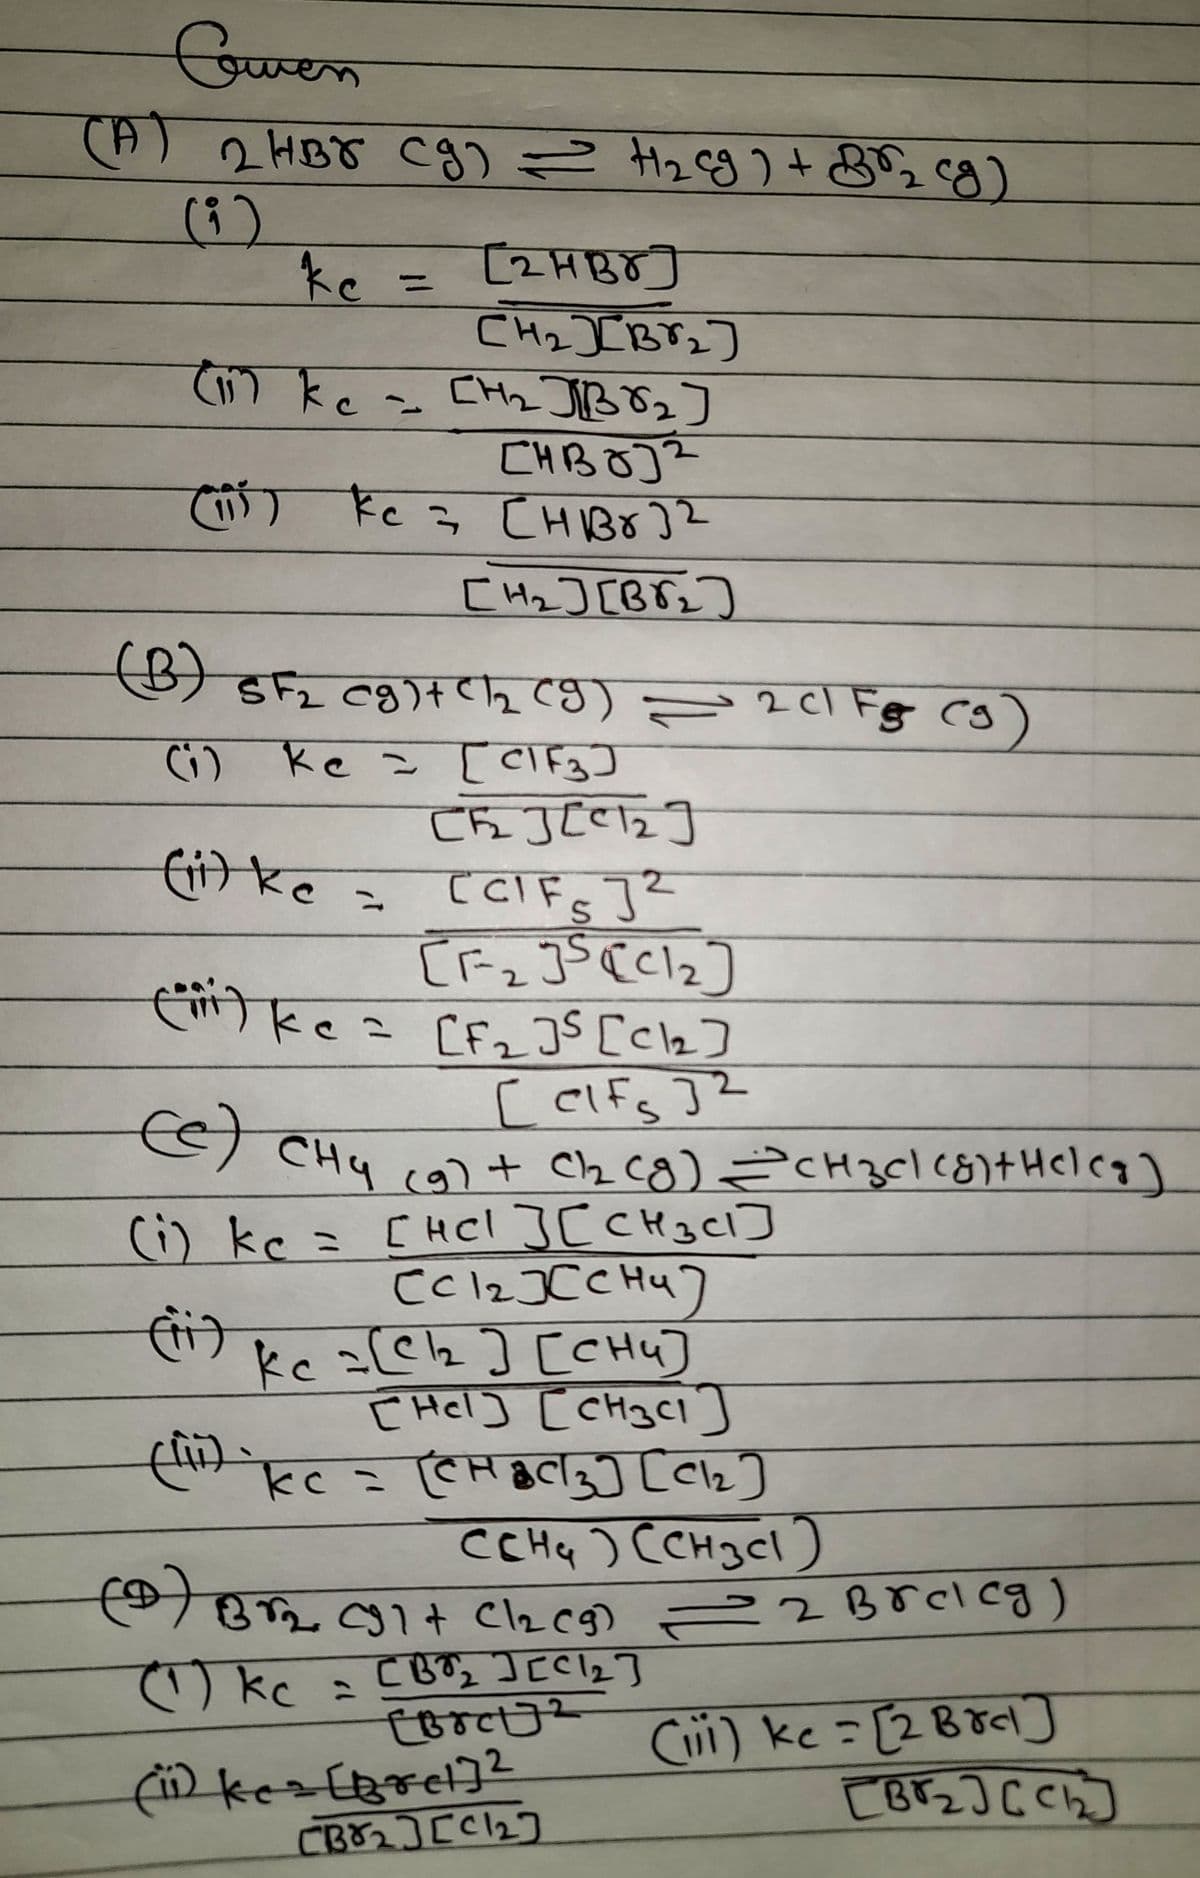 Cowen
(A) 2HBJ (g) = H₂ cg)+85₂ cg)
(9)
ke
[2HBO]
[H₂JB8₂]
(11) kc = [H₂2₂ JB 8₂]
[HBO]²
(1) kc = [HBO]2
[H₂] [B√₂]
(B) SF₂ (g) + C1₂ (9) = 2 cl Fg (3
(9)
(i) ke = [CIF3]
(ii) ke
CRJEC12]
[CIFS]²
[F-₂ J5 (C1₂]
(²²) ke = [F₂]³ [Cl2]
[elfs ]²
(e) CH4 (9) + C1₂ (8) =CH₂Cl (8)+Heleg]
(i) kc = [HCl ][CH3C1]
сскажени)
(ii)
Kc = [C12₂] [CHU]
[Hel] [CH3C1]
2
(ii) kc = (C3] [2]
CCH₂) (CH3C1)
(0) B1₂ (91+ Cl₂ (g) = 2 Breleg)
(1) kc
CB₂ [1₂]
2
[BrctJ2
=
(11) ke= [Bret] ²
[B8₂] [C1₂]
(iii) ke = [2 Brd]
[Br₂][C1₂]